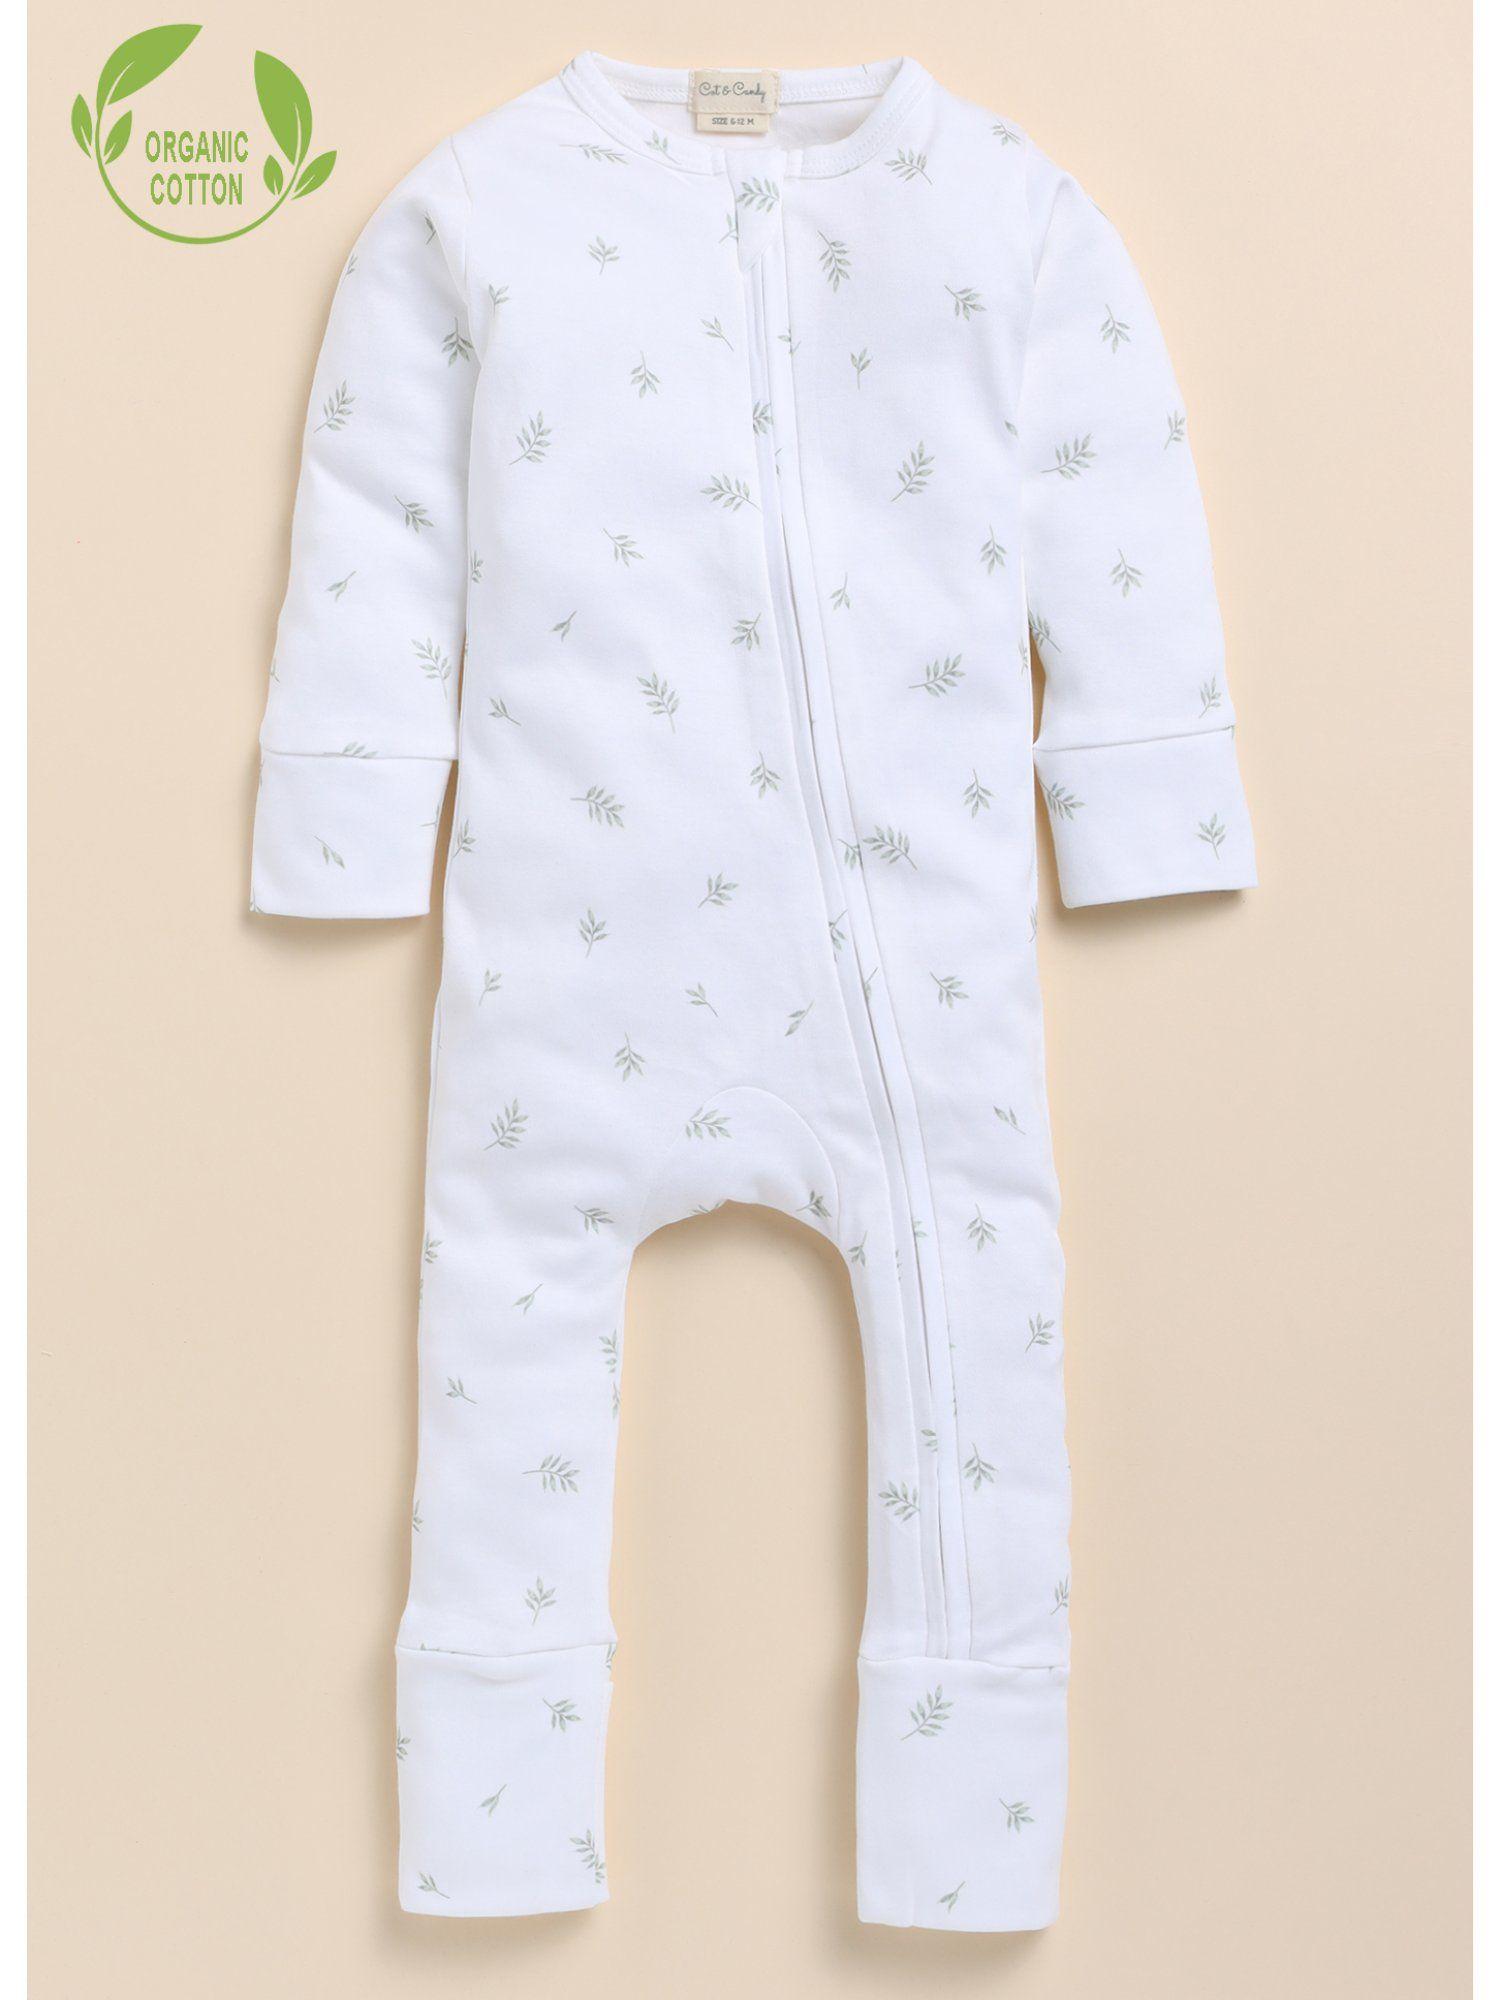 Full Sleeve Organic Cotton Kids Zipsuit-White